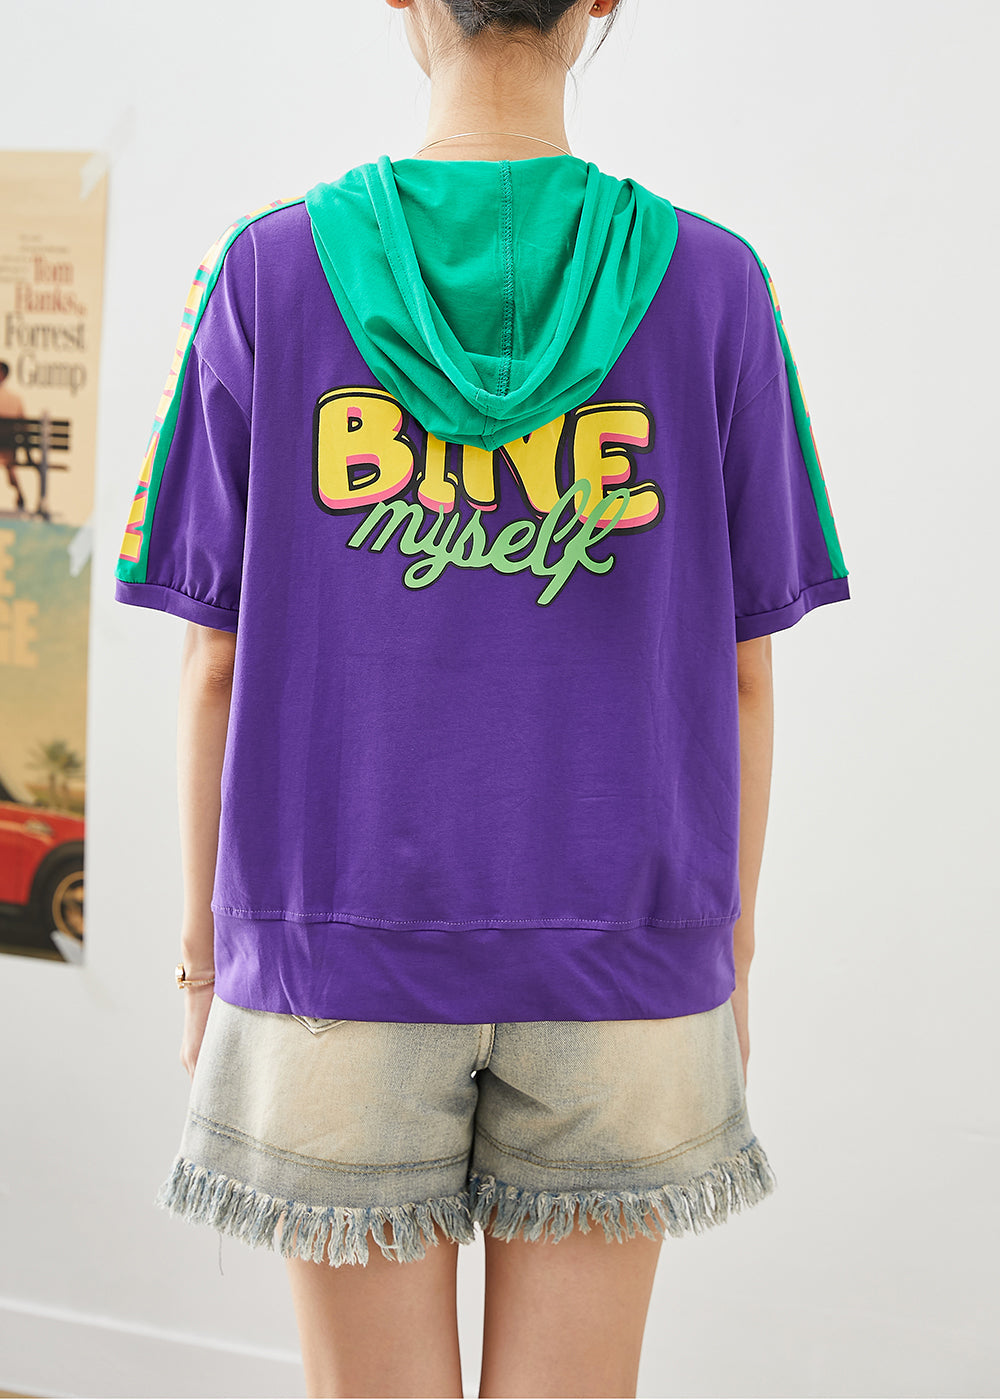 Purple Patchwork Cotton Sweatshirts Top Hooded Print Summer